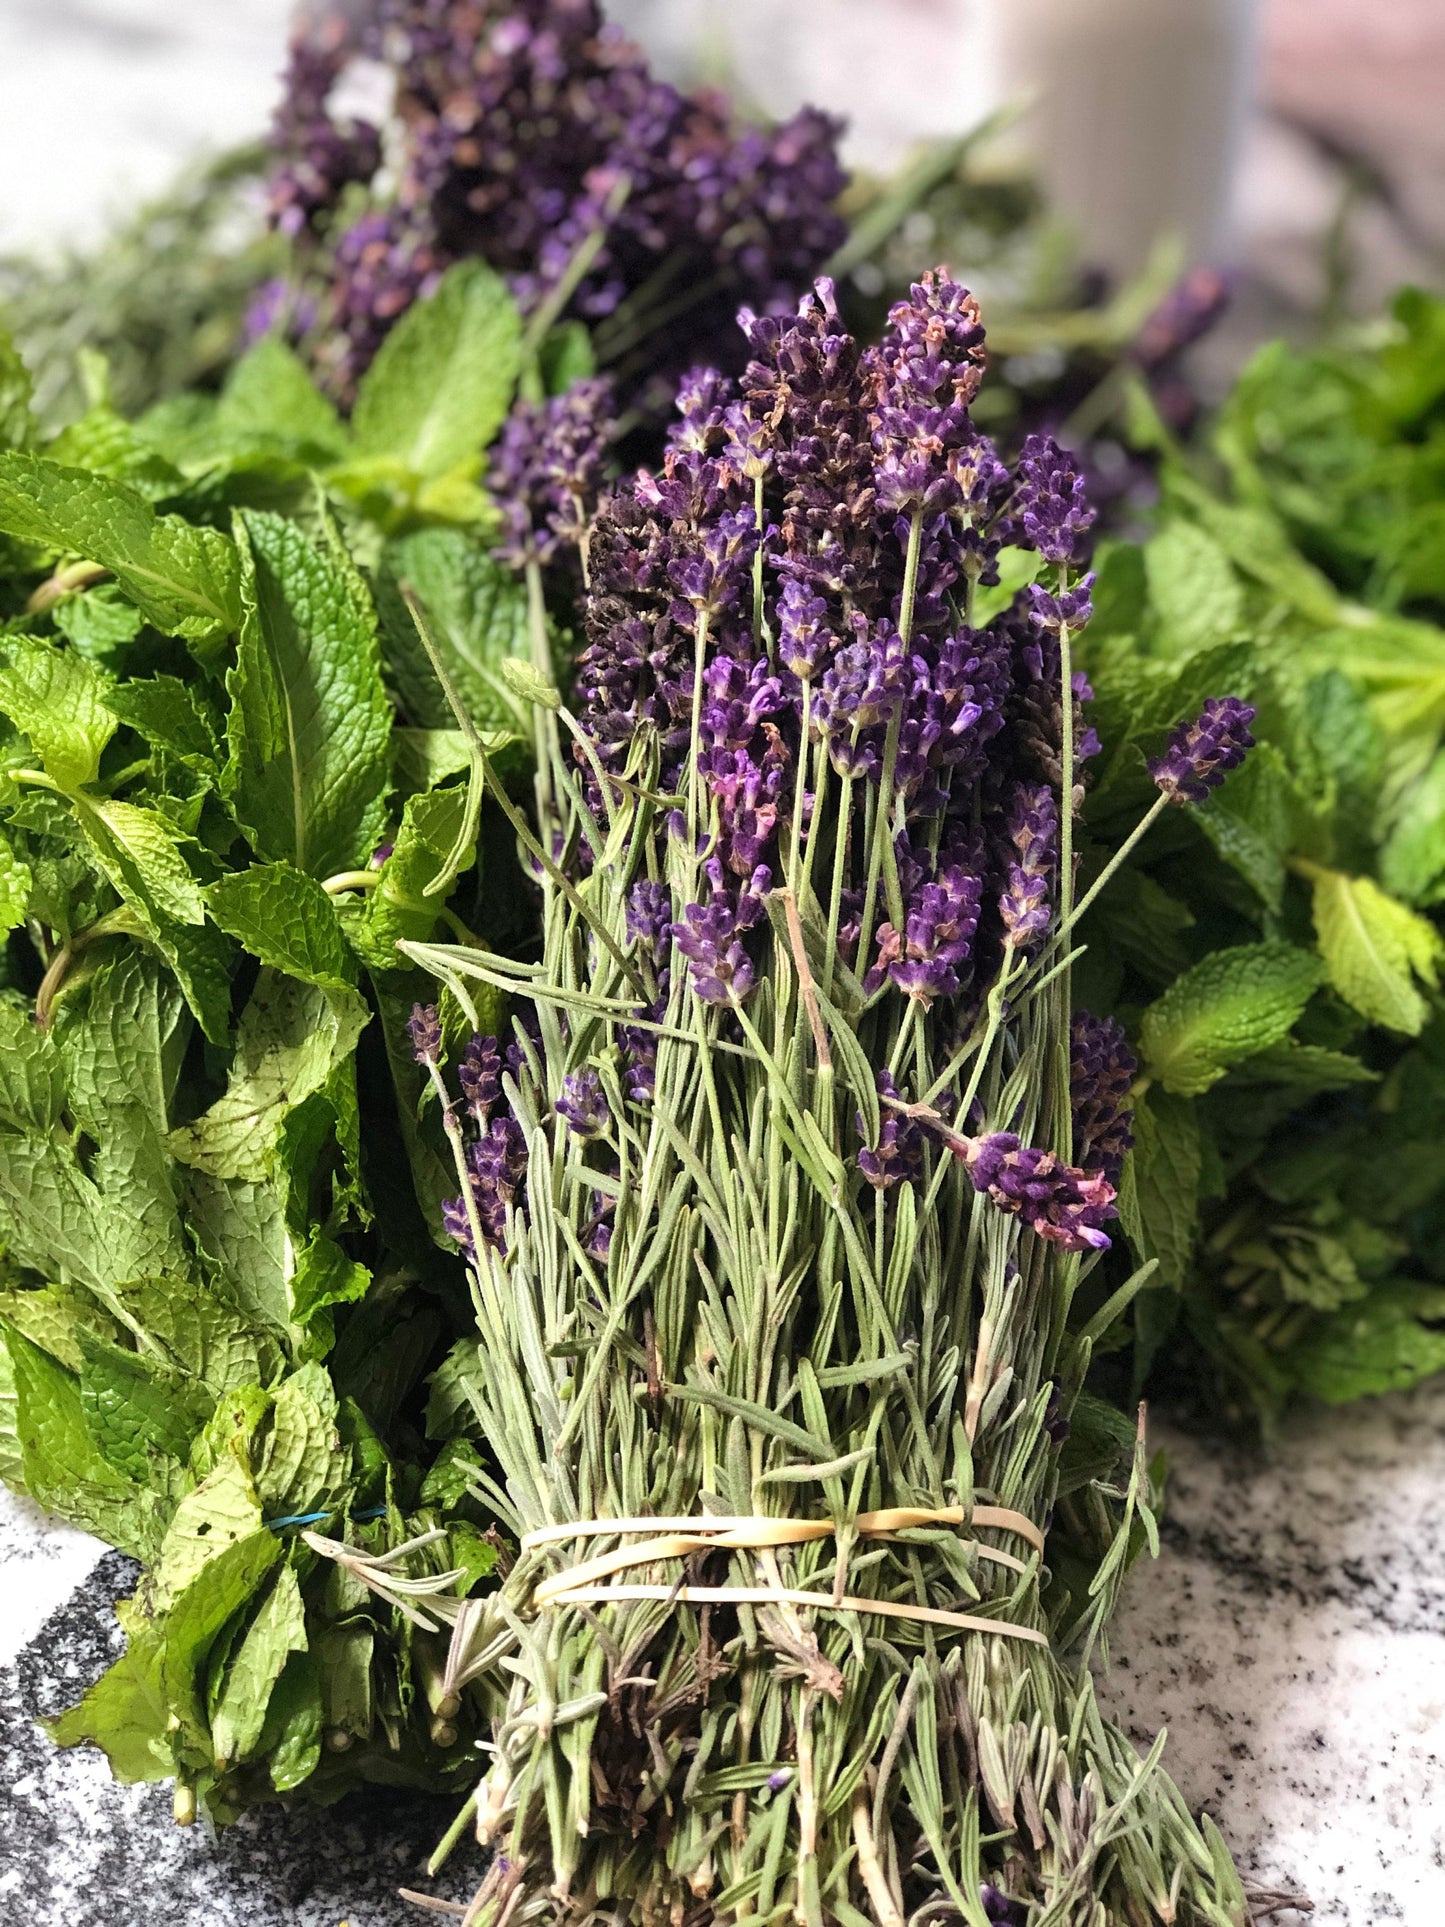 Botanical Herbs, Bulk Herbs, Loose Herbs, Assorted Herbs, Magical Herbs, Dried Flowers, Tea Herbs, Just the Basics Herbs, Mix and Match